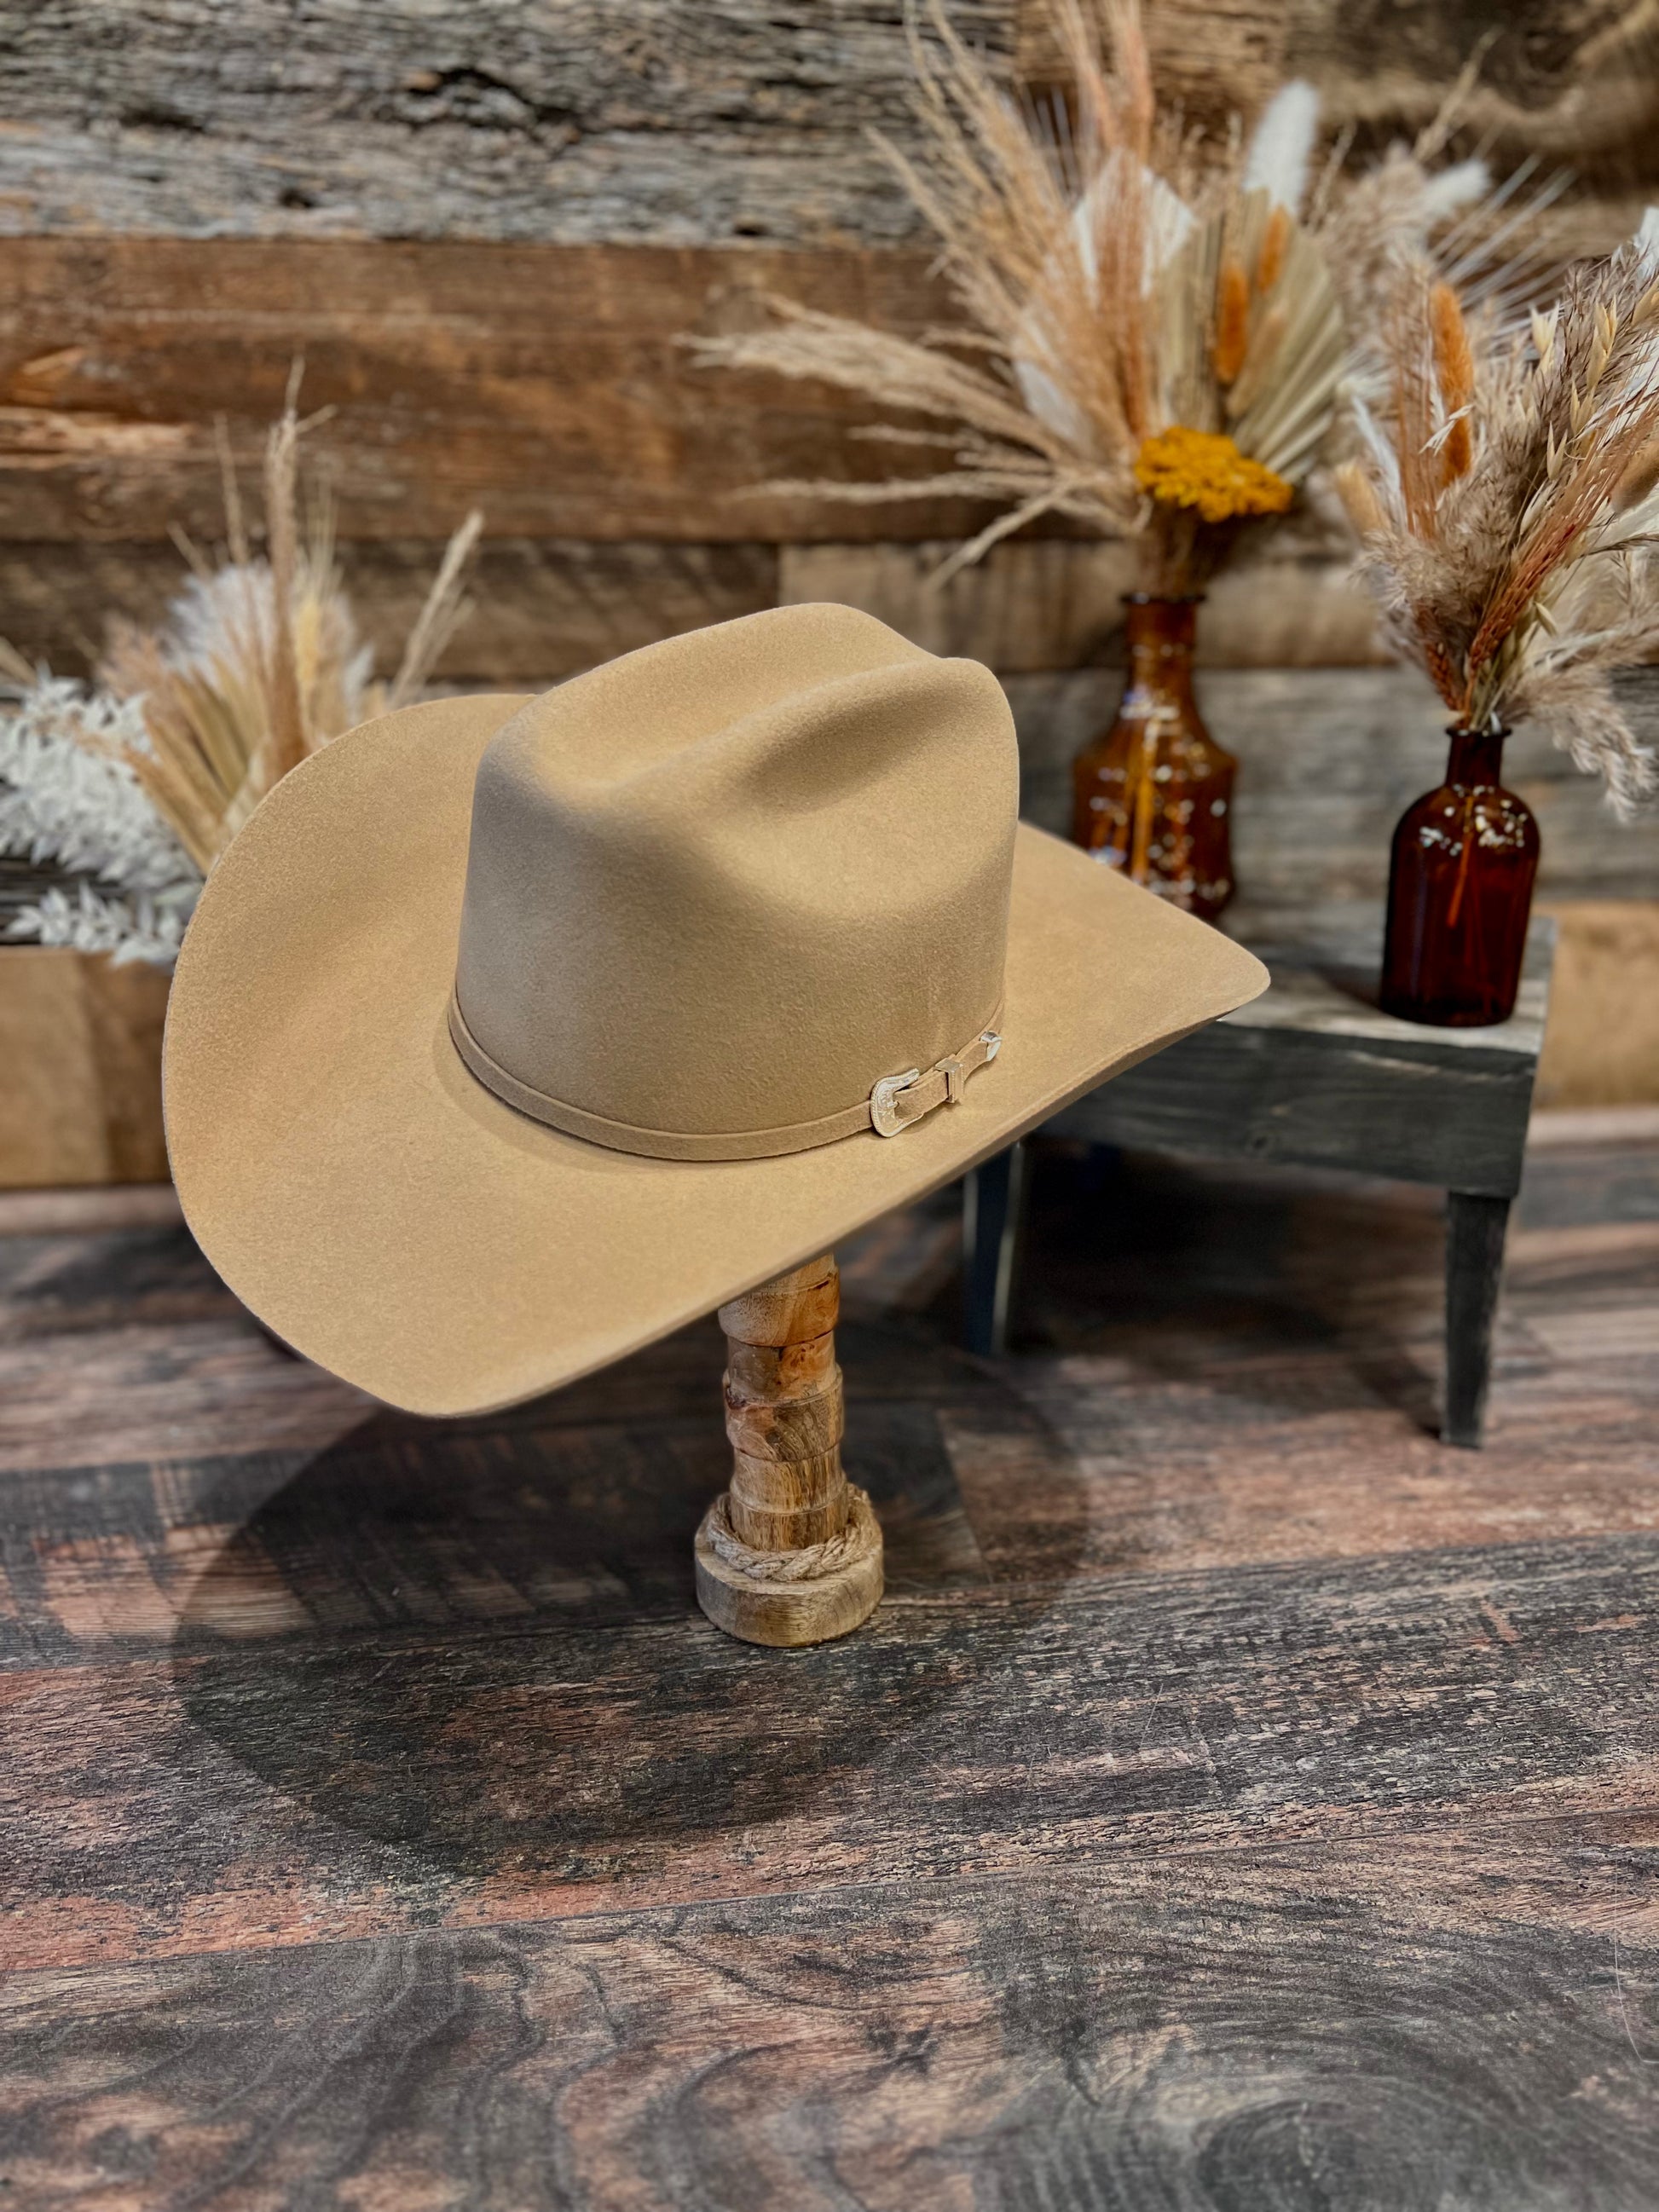 Bailey Men's Costa Western Straw Hat